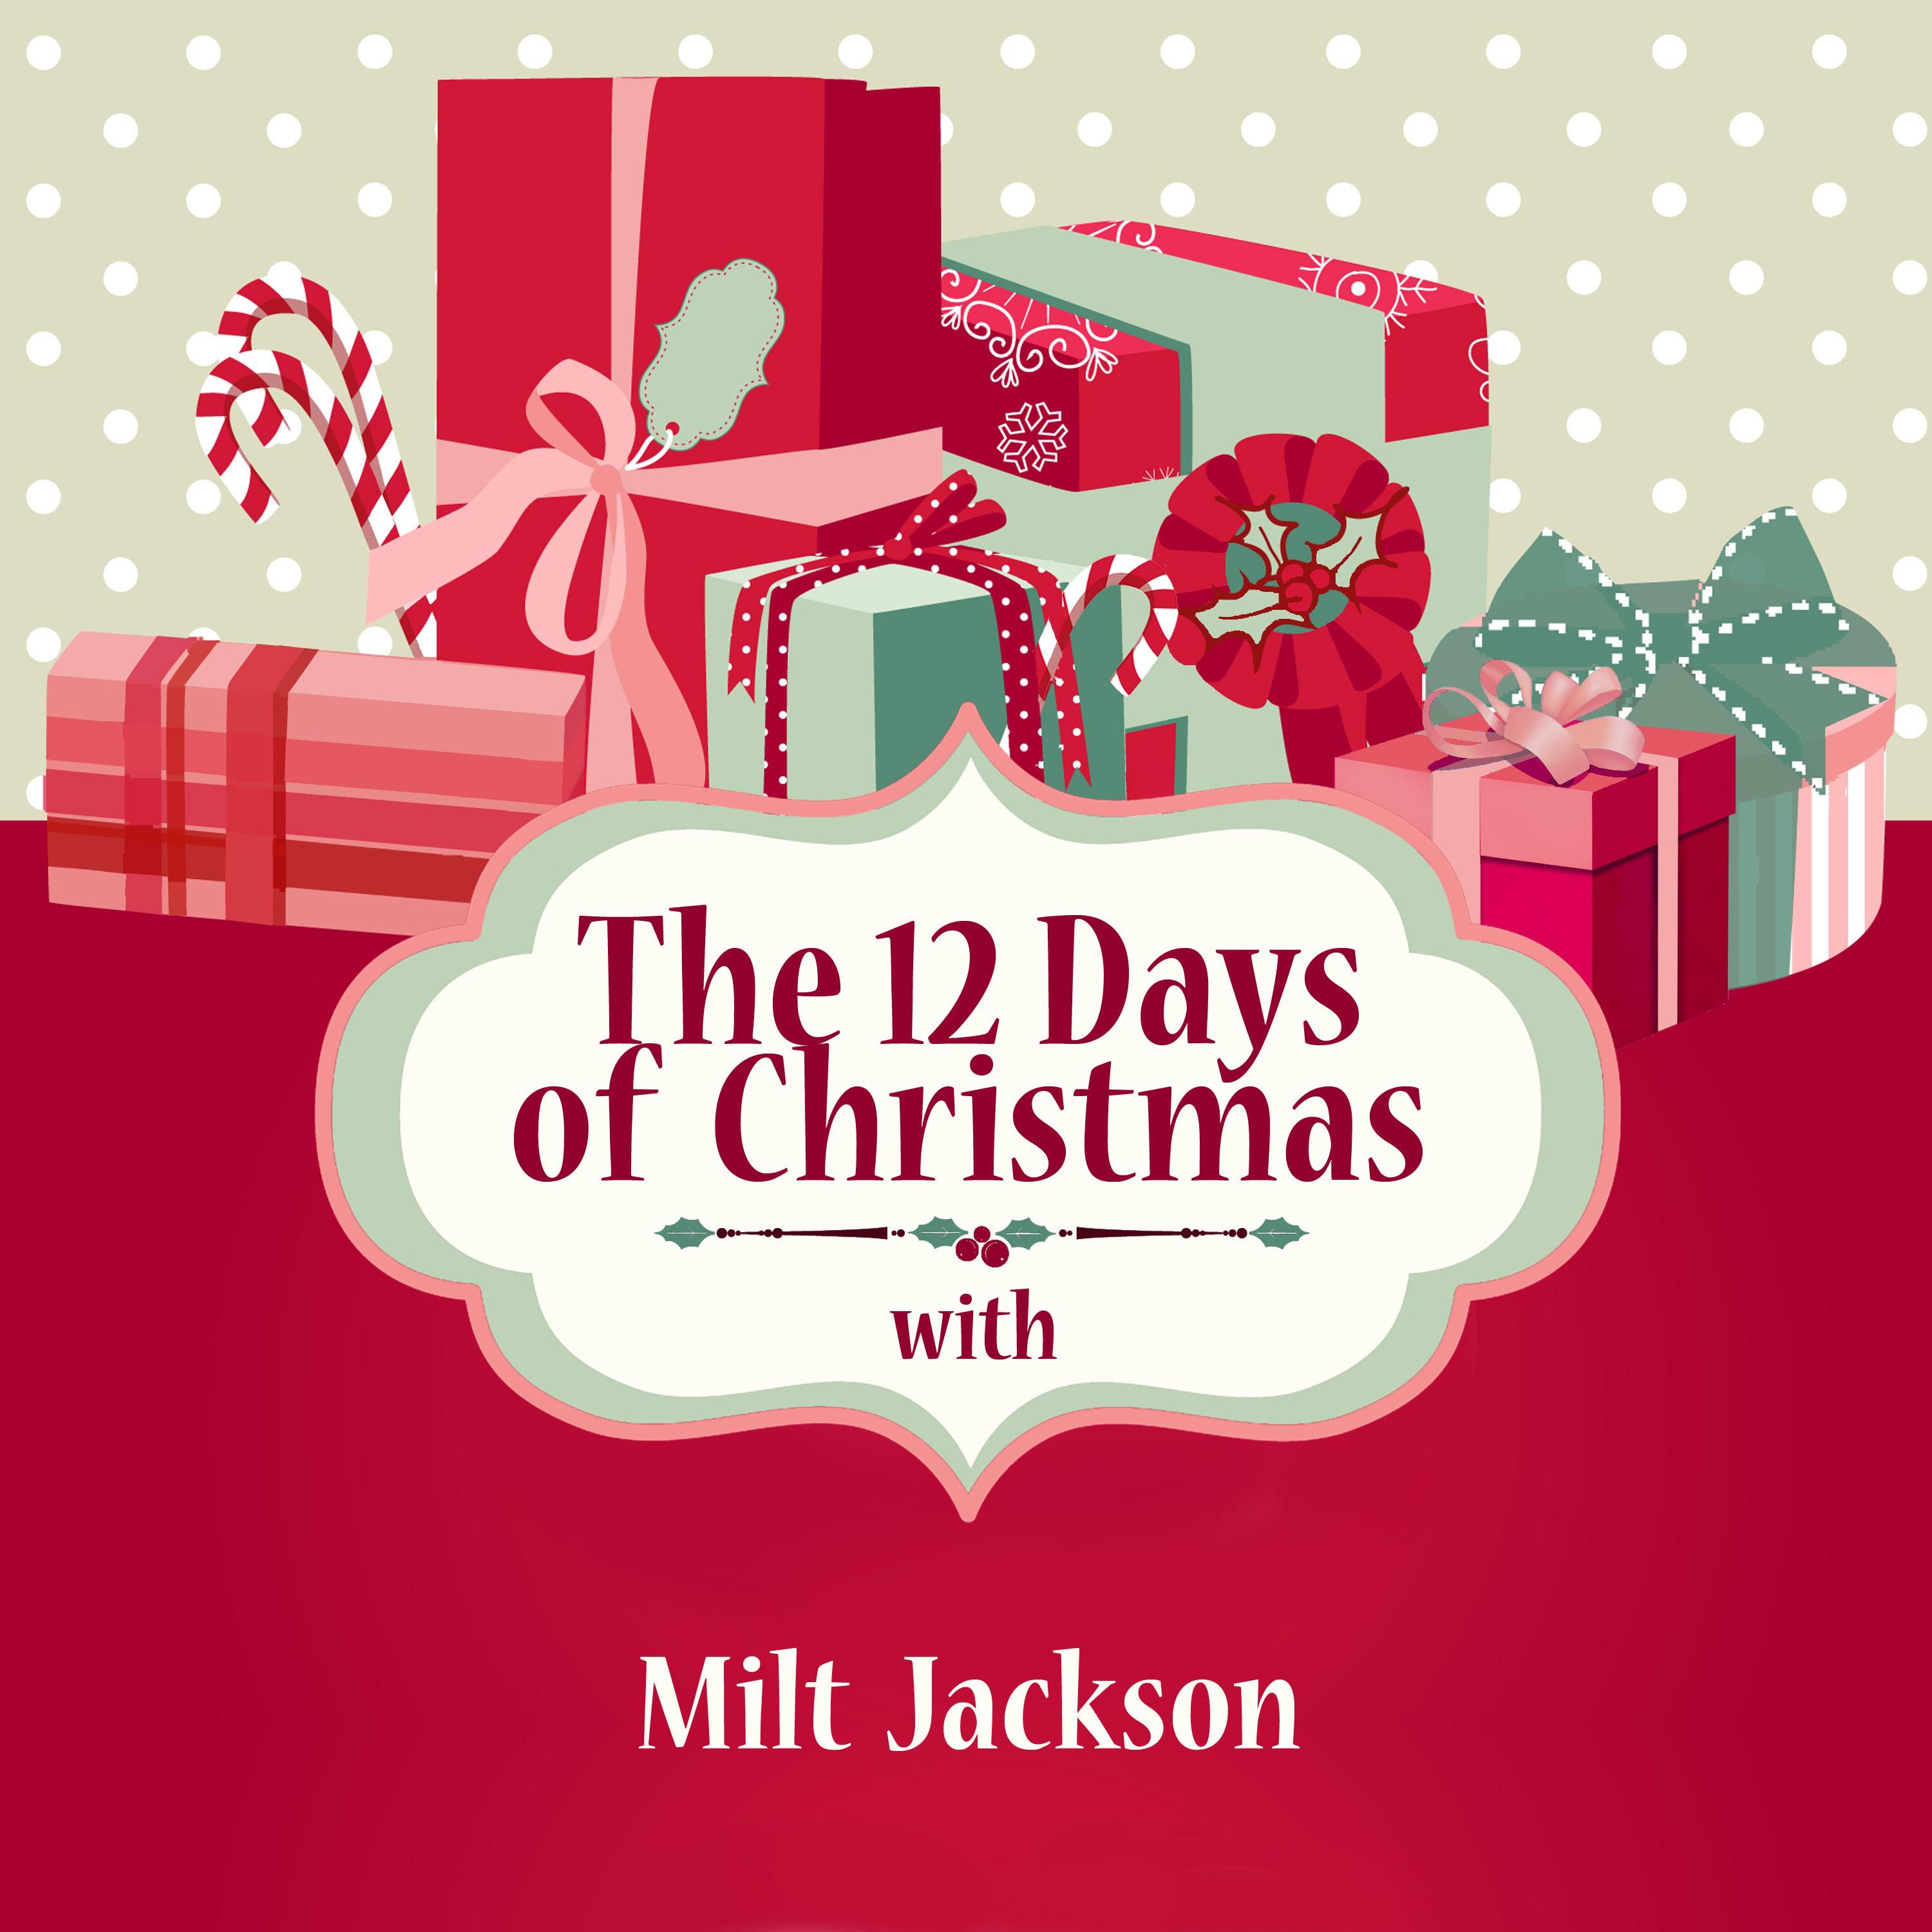 The 12 Days of Christmas with Milt Jackson